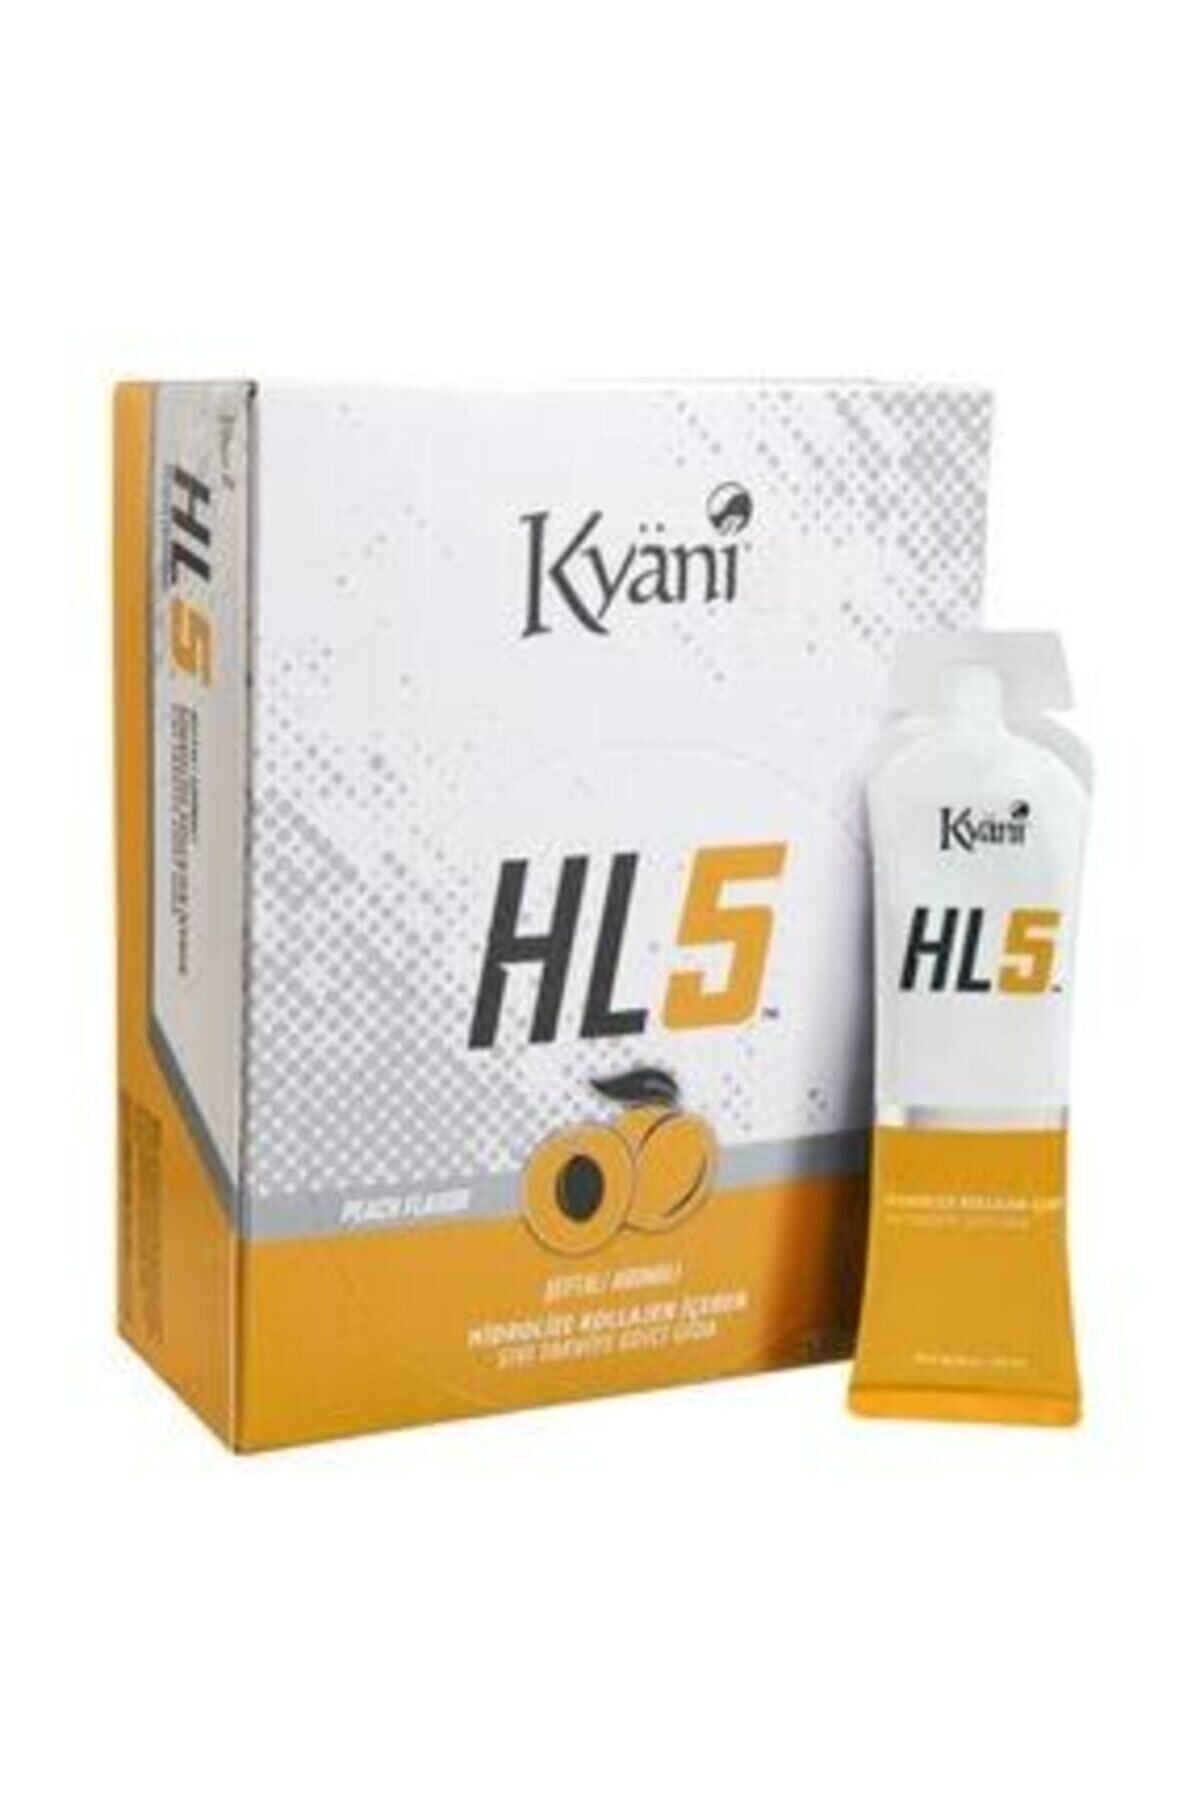 Kyani Kyani Hl5 Tip 5 Kolajen Helal Sertifikali Dogal Kolajen Protein Vitaminleriyle Kyanihl5